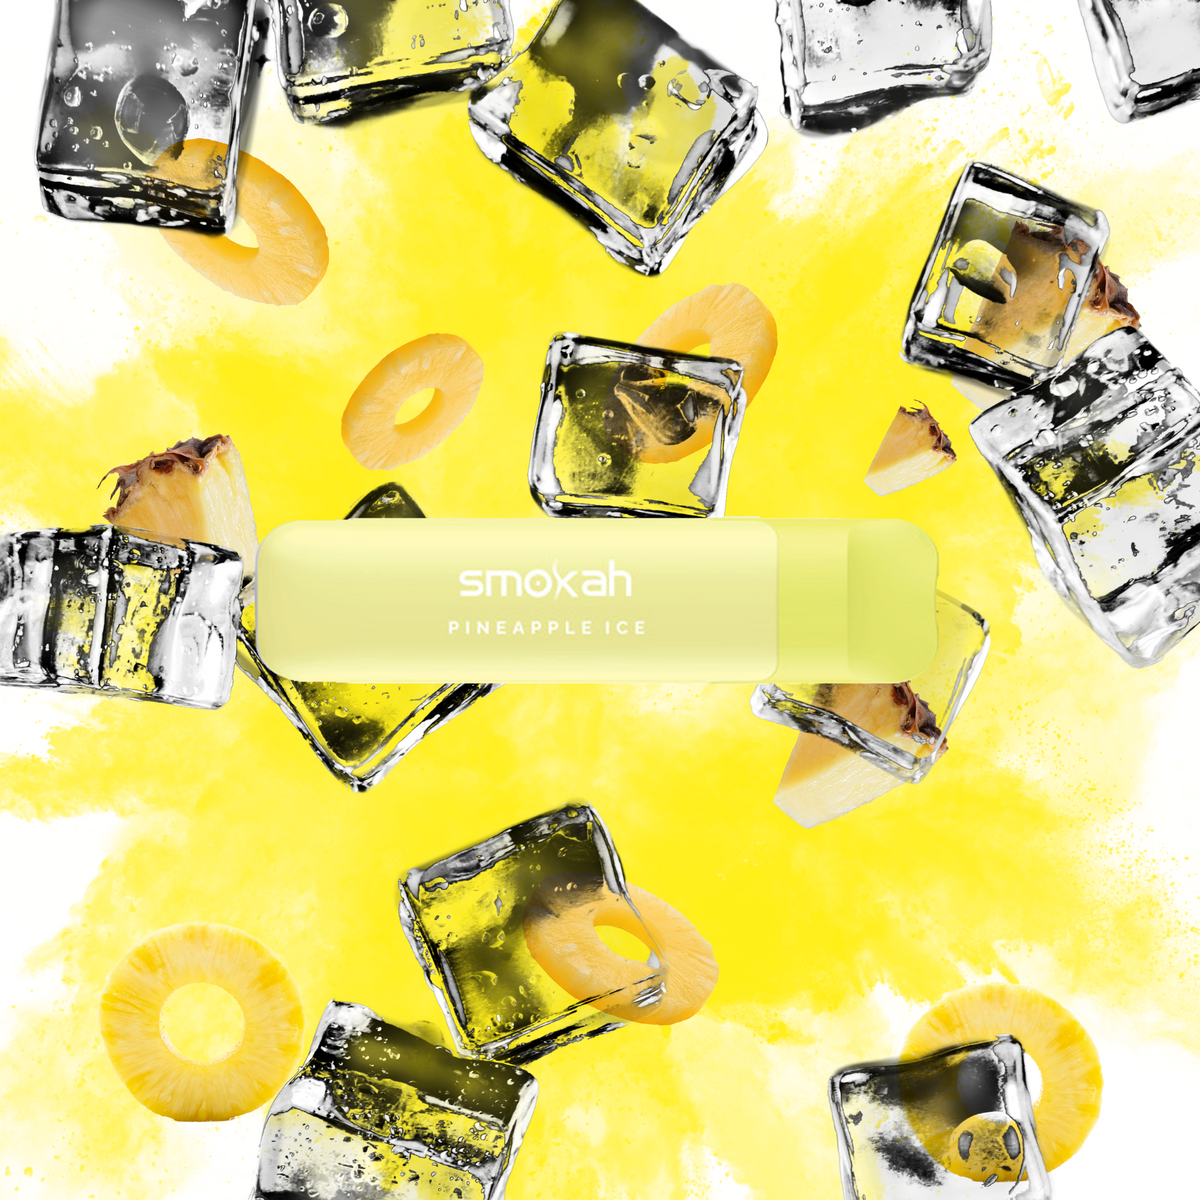 Smokah GLAMEE Pineapple ICE "Ananas" 10er Packung / Display (Sparset)